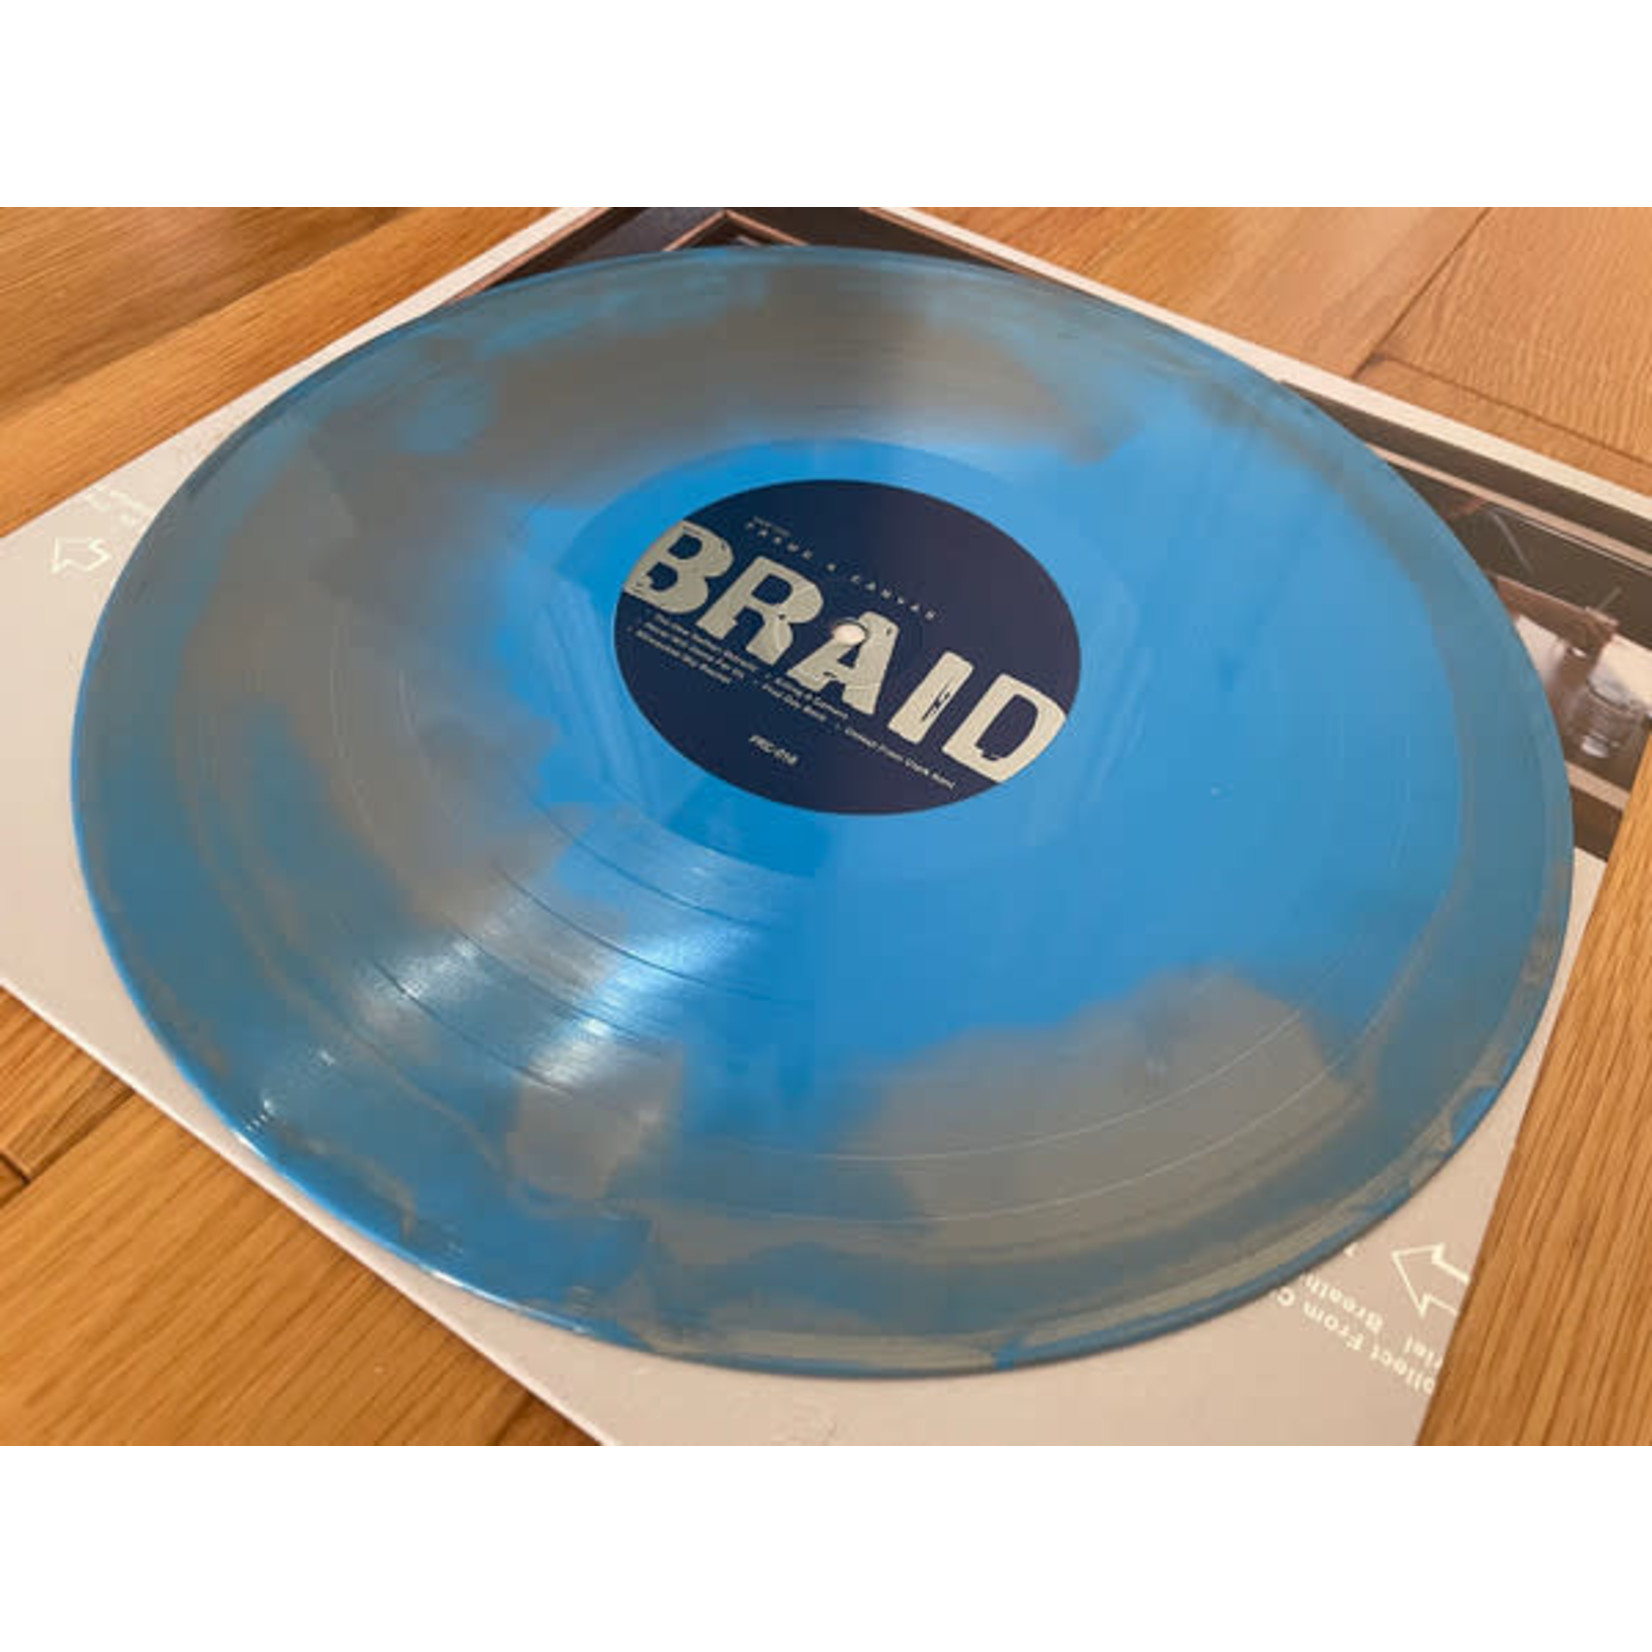 [New] Braid - Frame & Canvas (25th anniversary edition, silver vinyl)